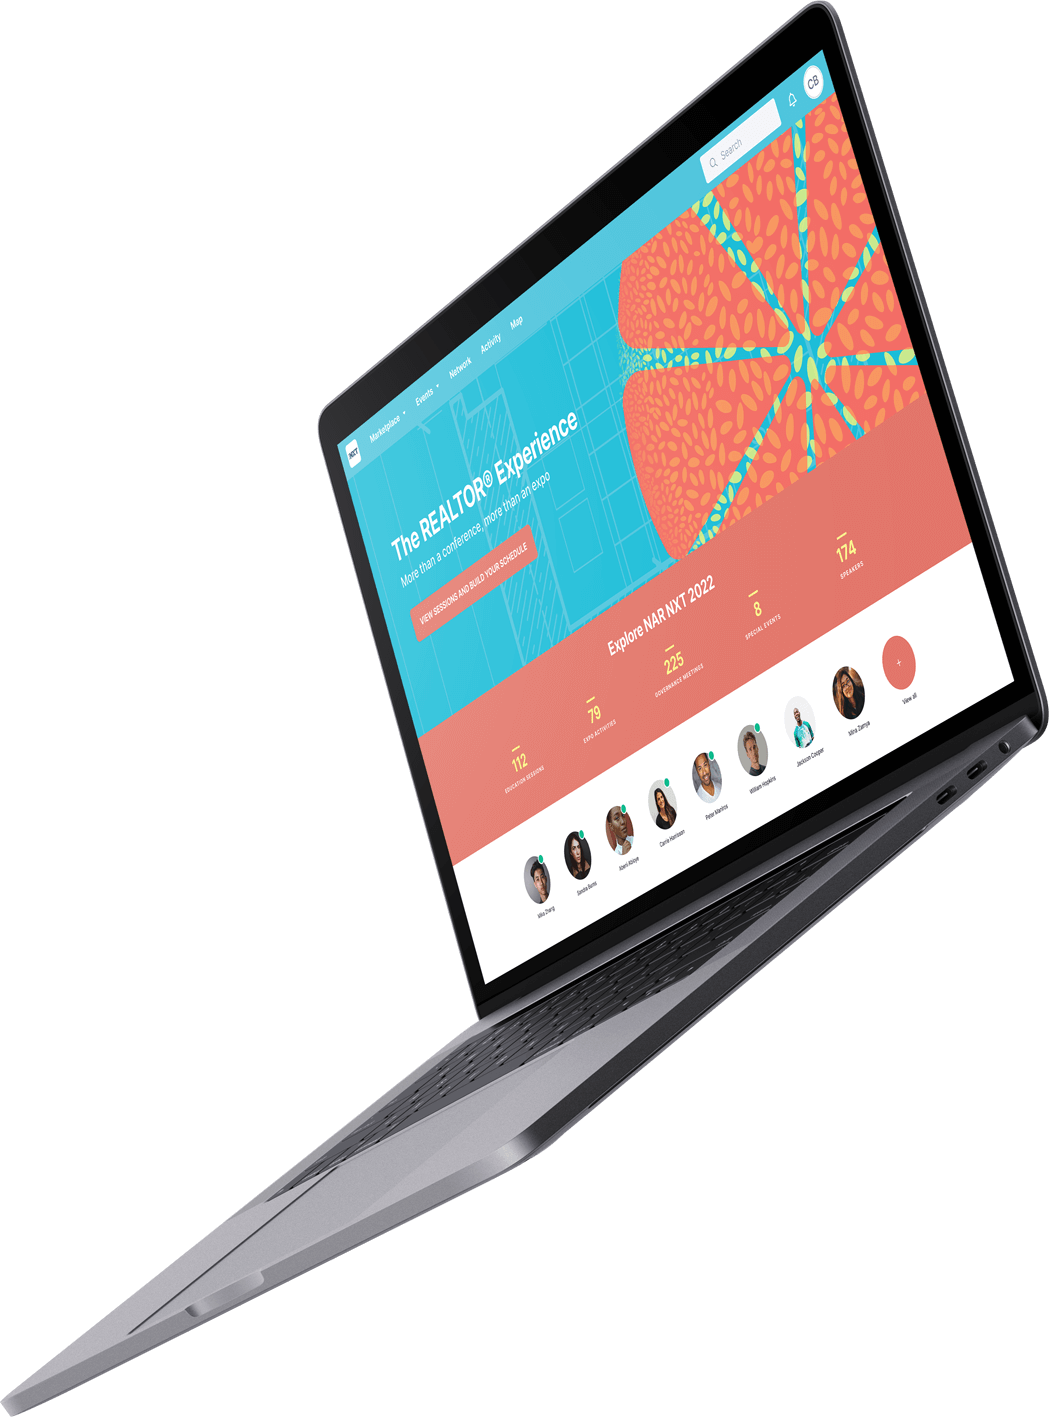 Laptop featuring Sherpa app